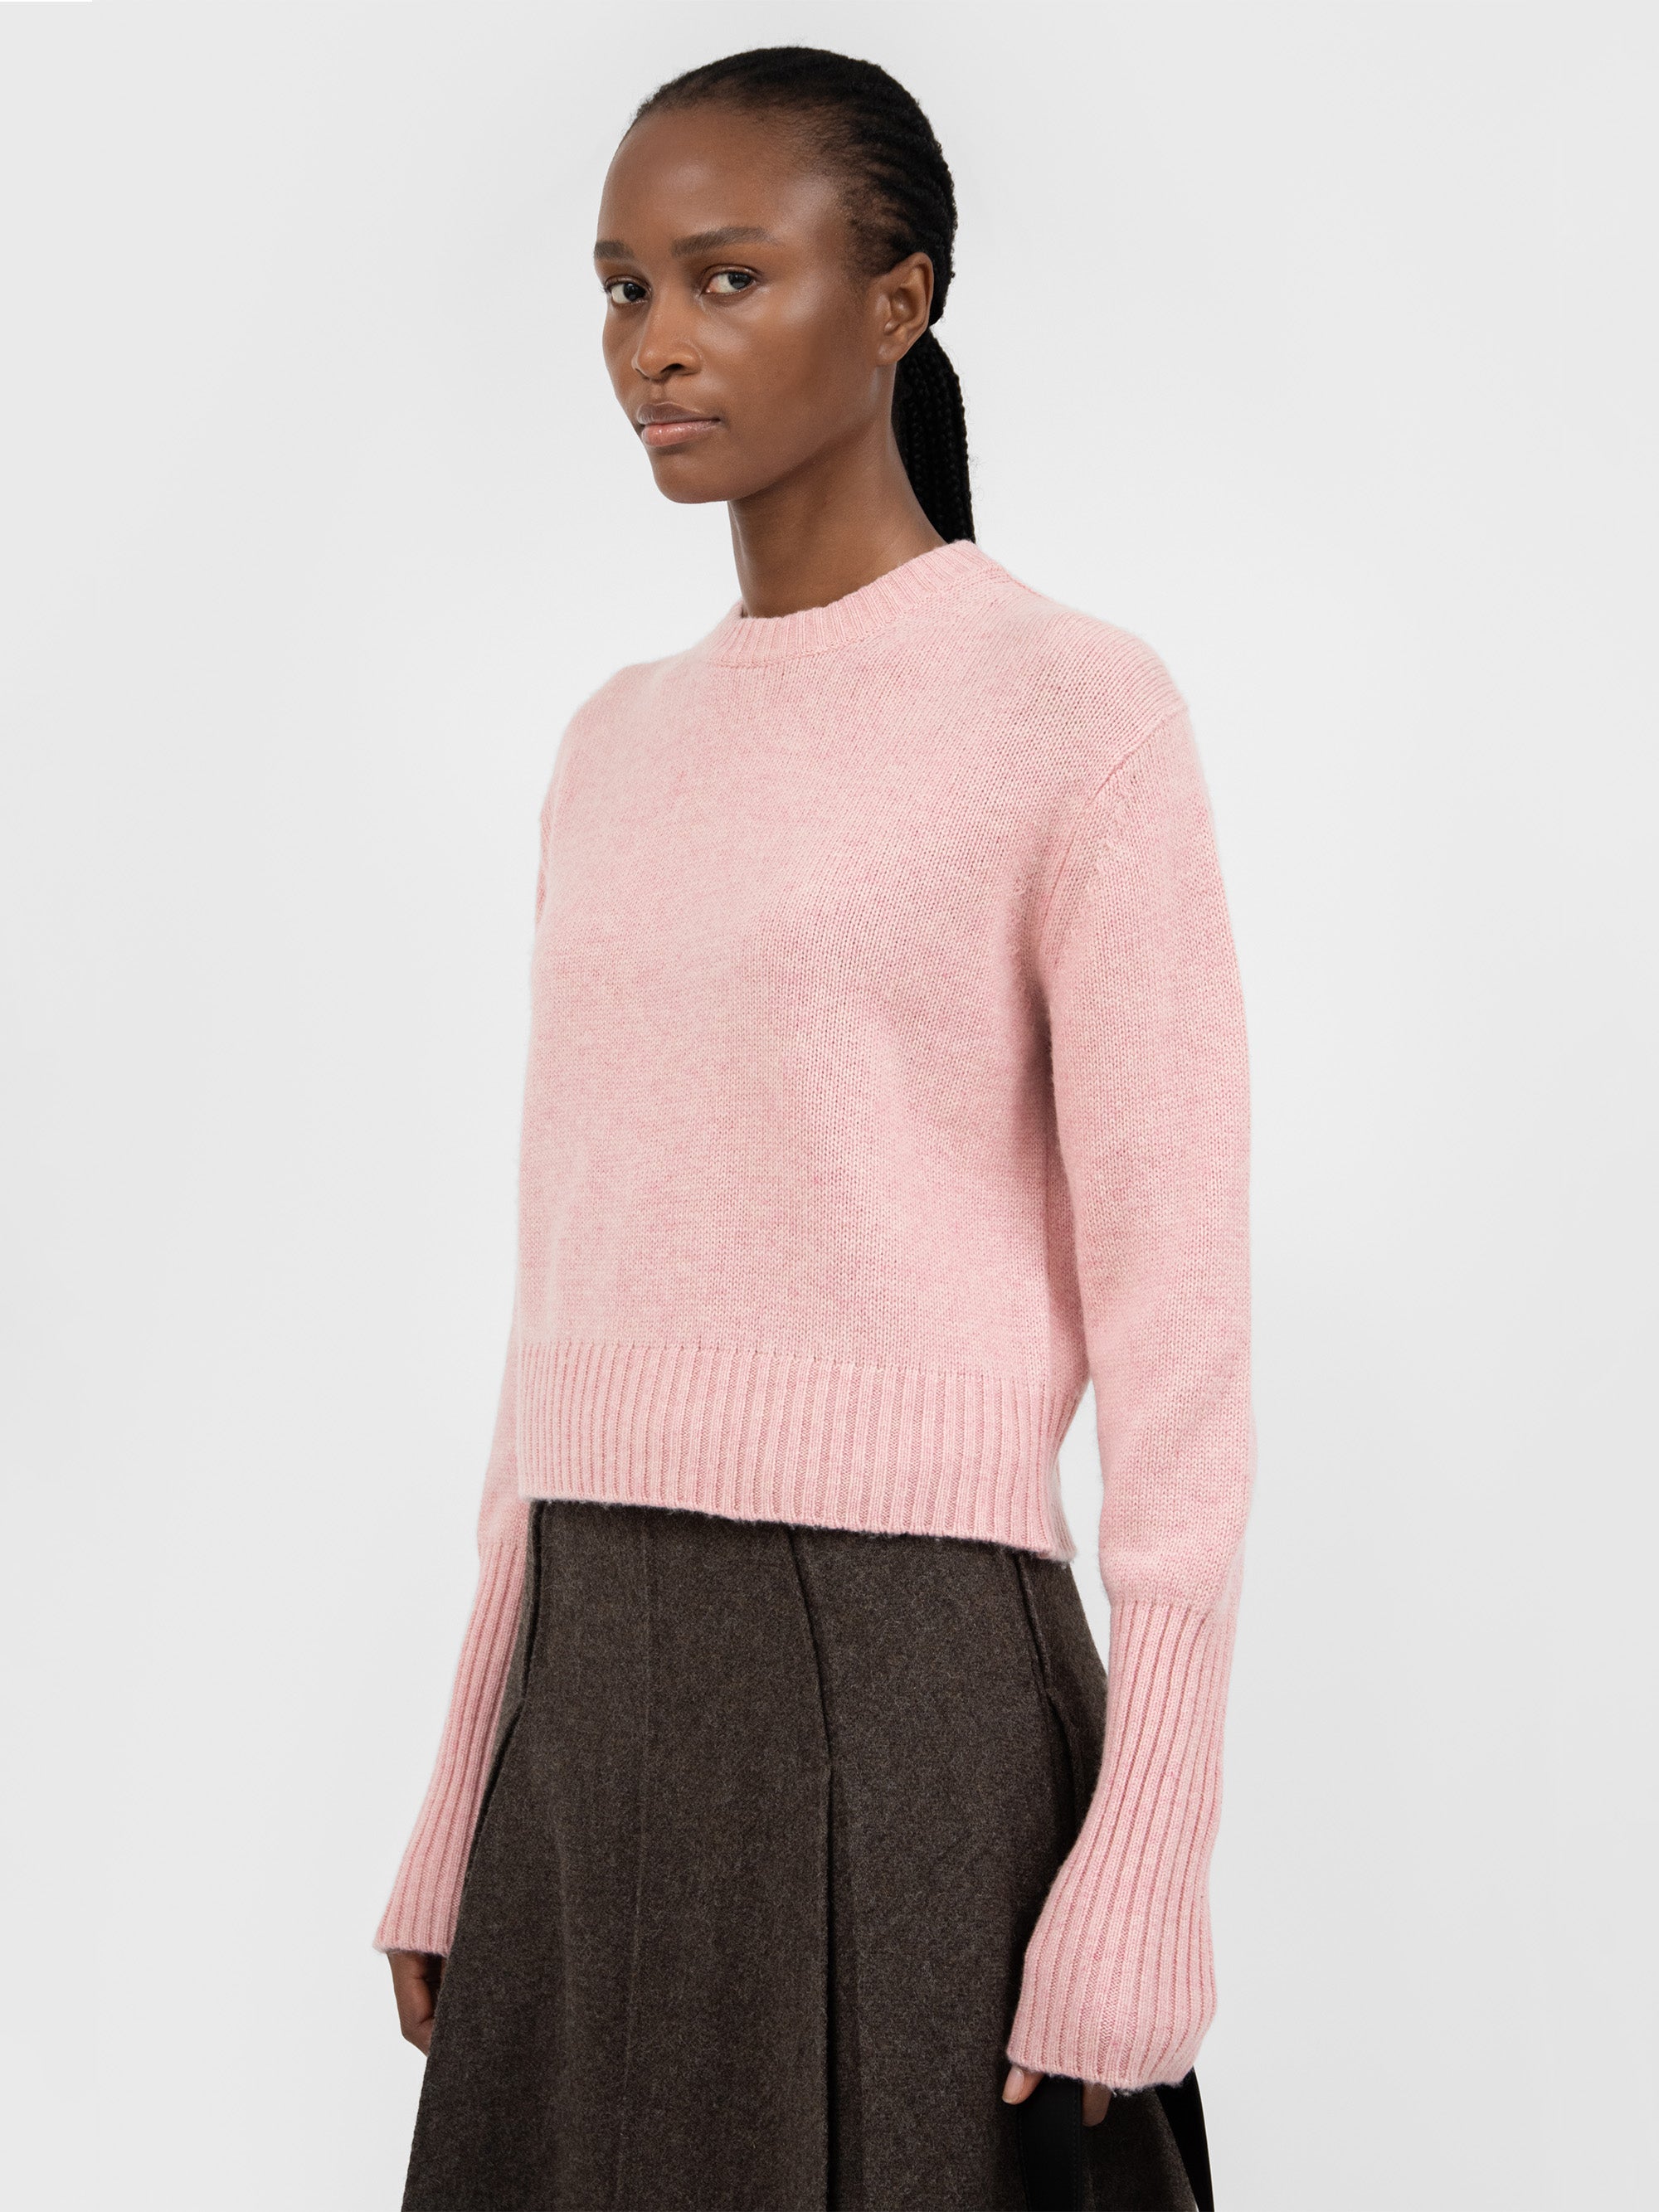 Goodall Wool Cashmere Blend Knit Top Peach Pink